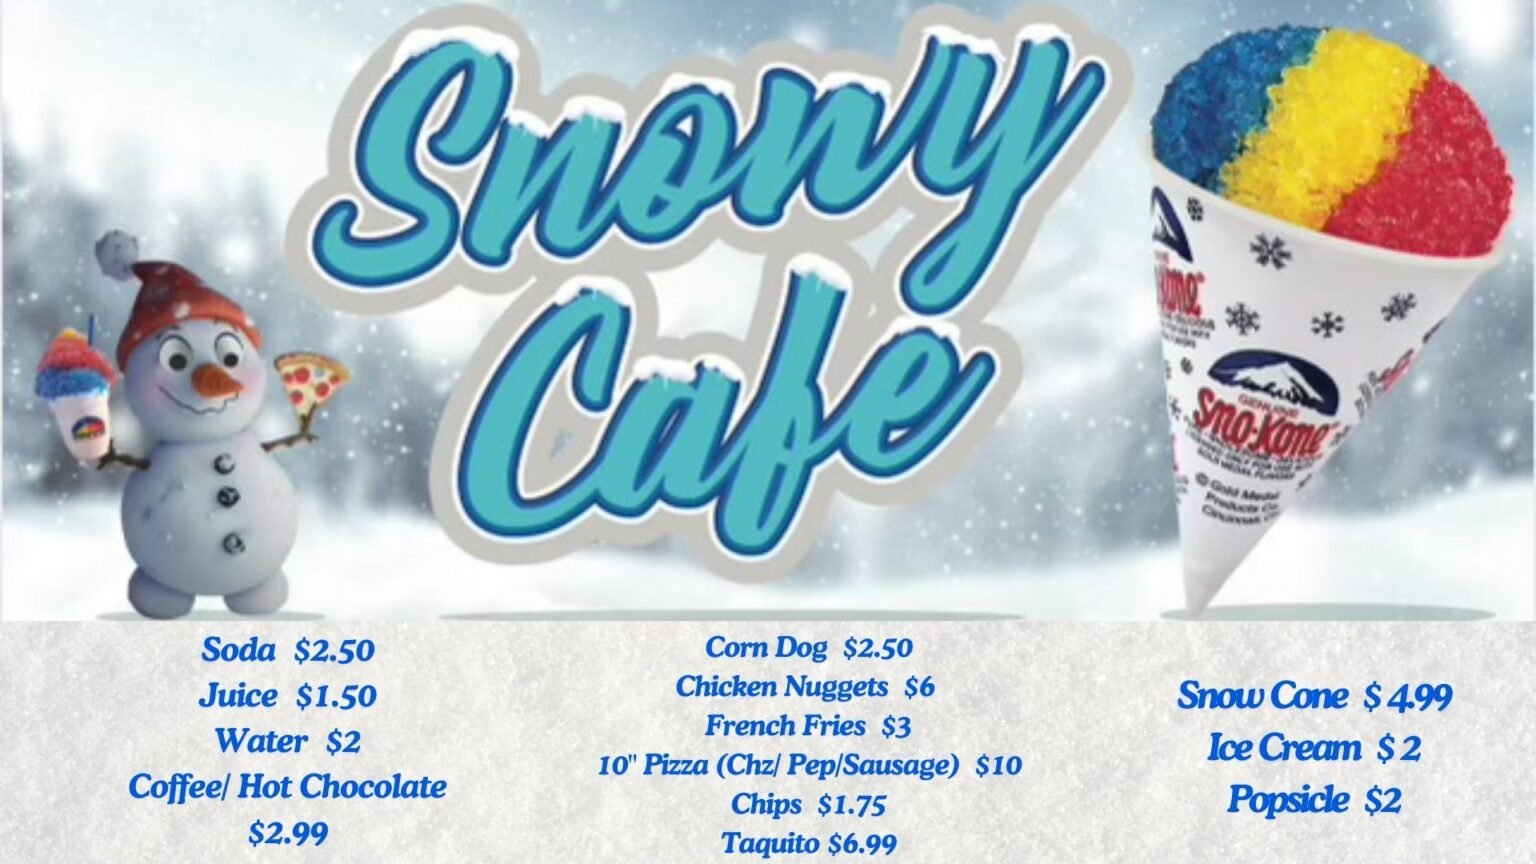 Snowy Cafe menu